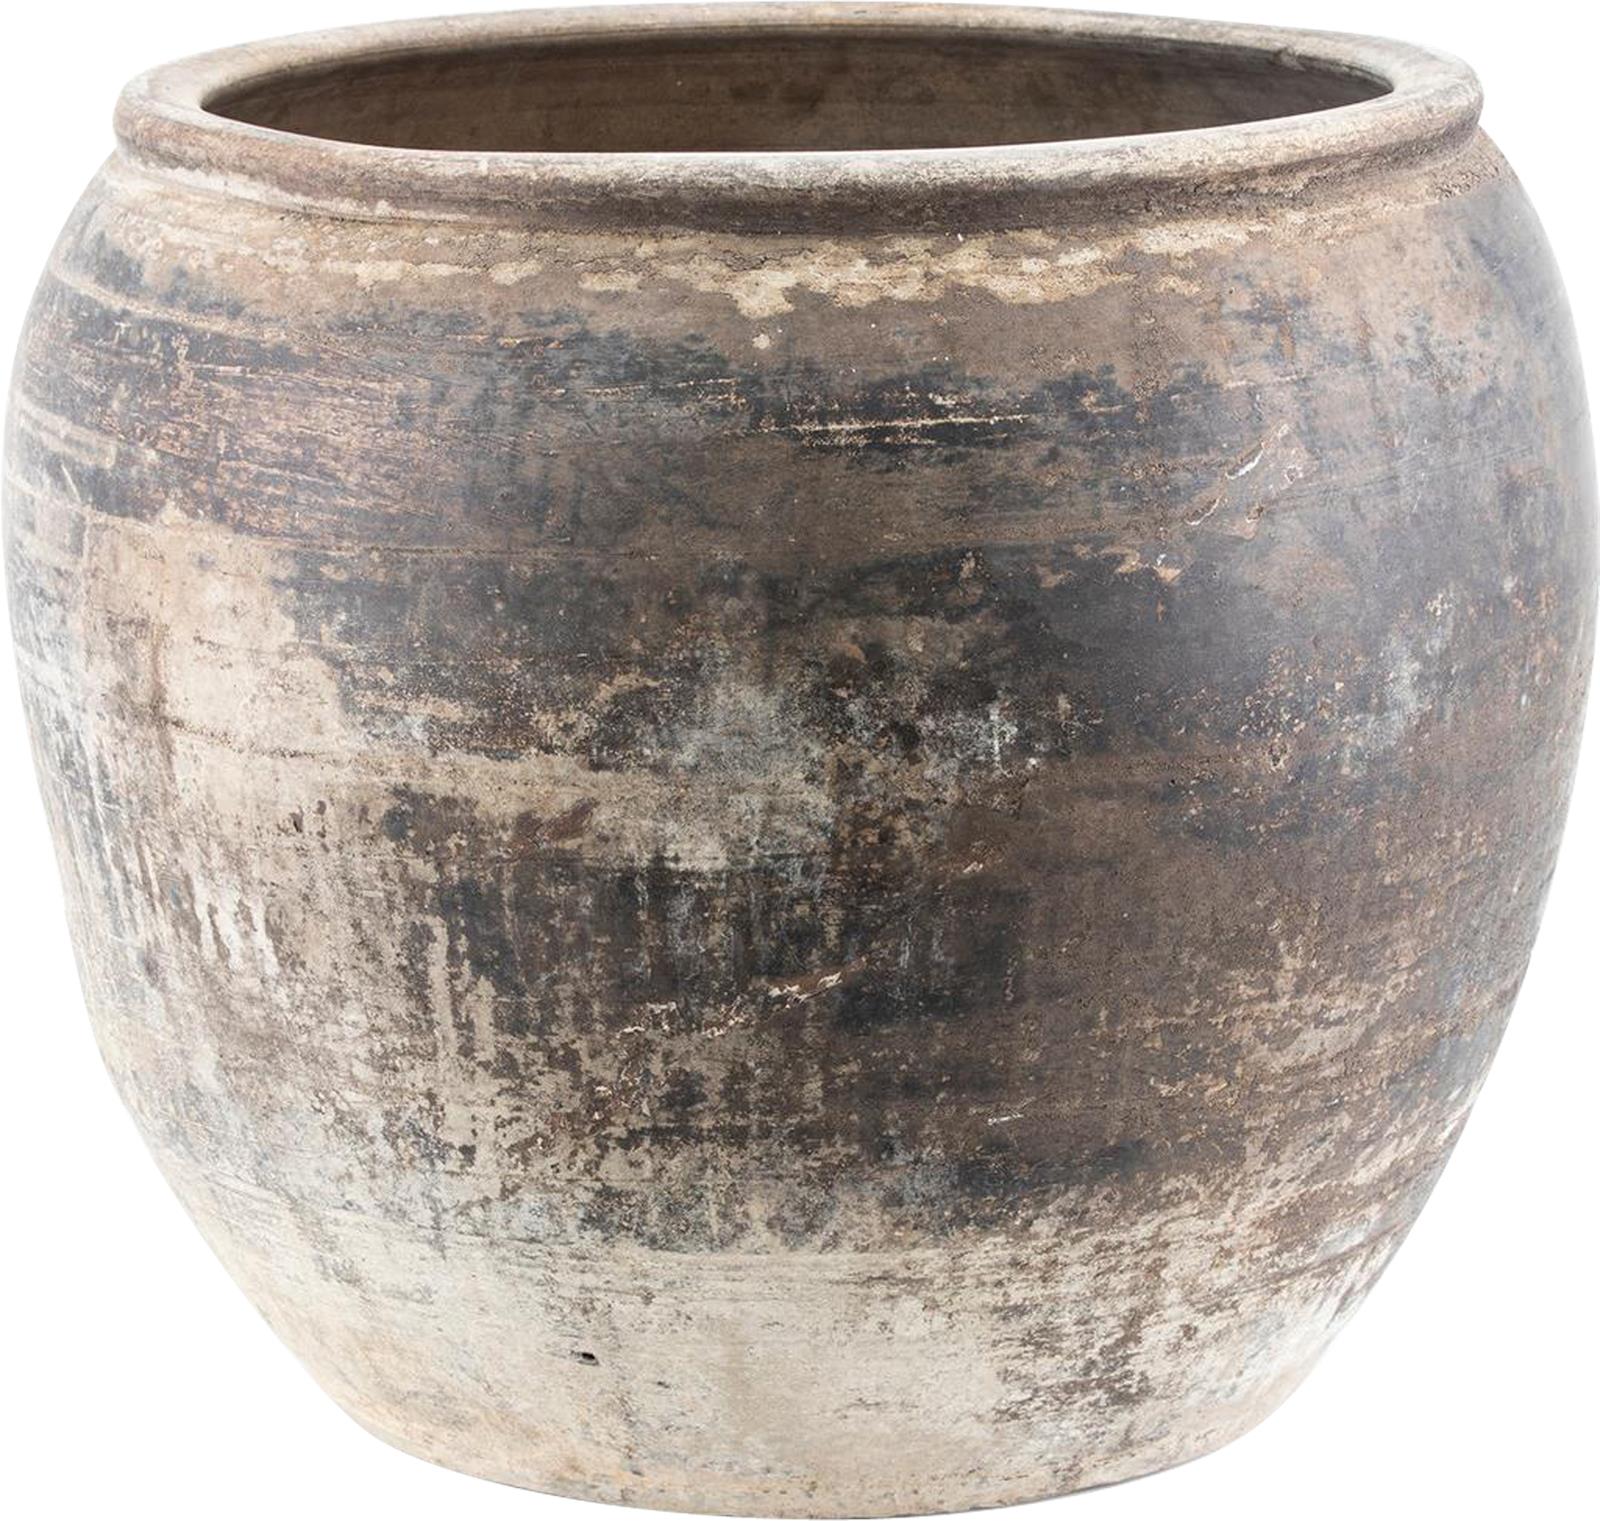 Water Jar Vase Vintage Large Gray Pottery Ceramic Handmade Hand-Cra-Image 7